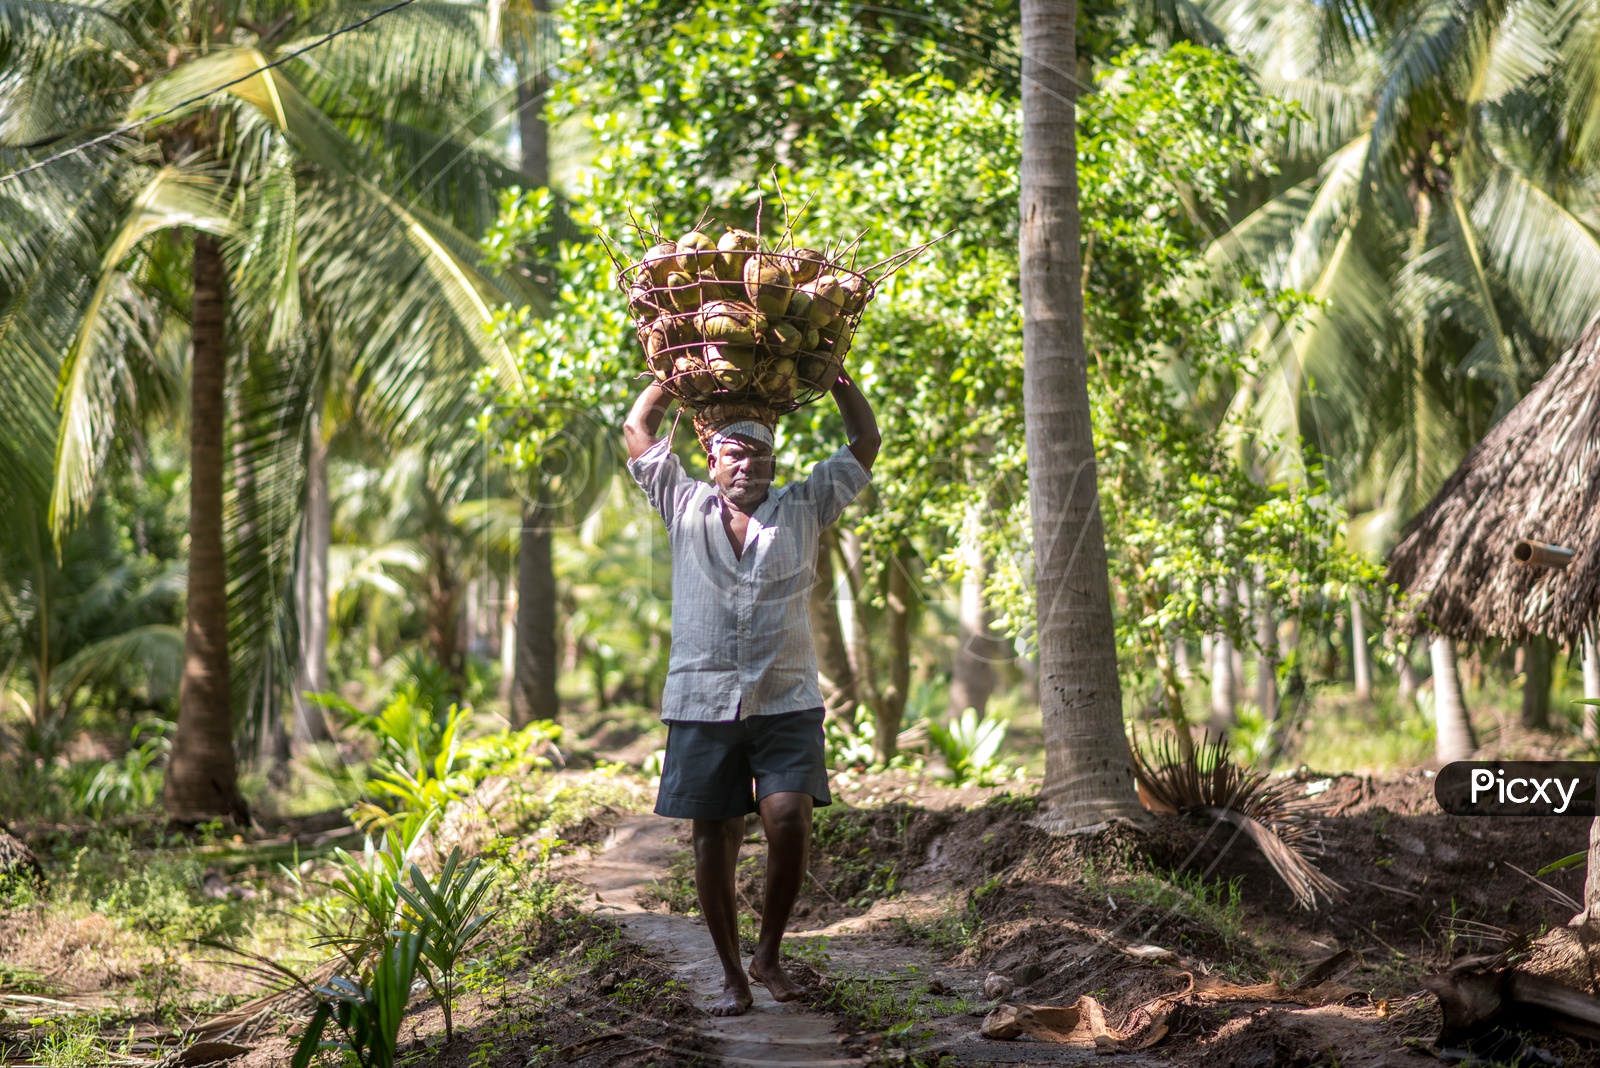 Farmers in coconut farms groves